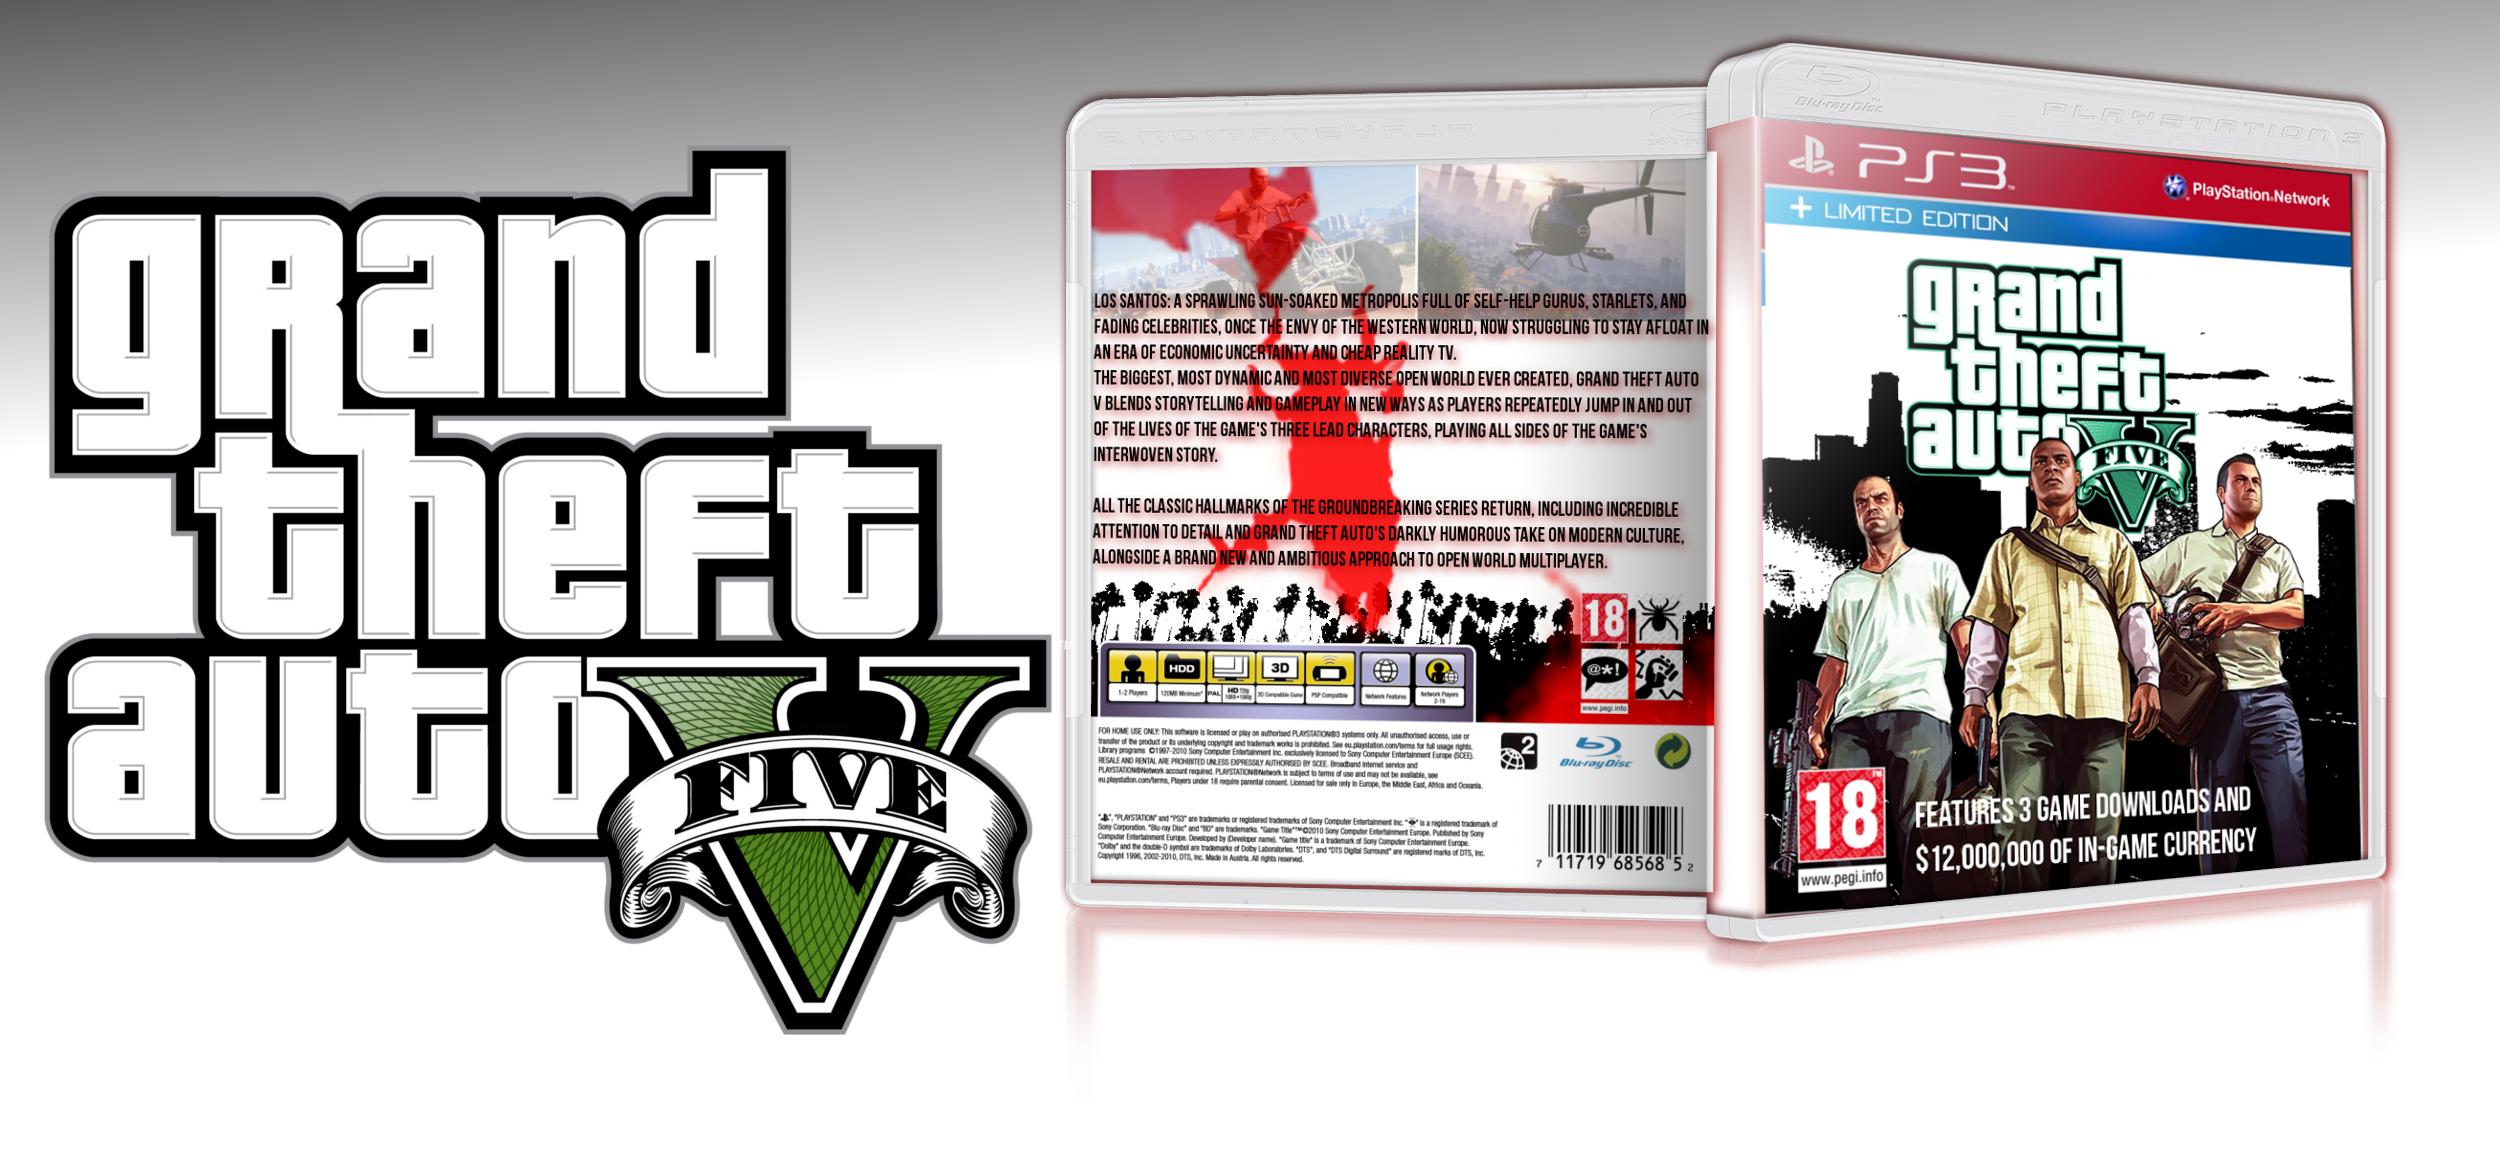 Grand Theft Auto V Limited Edition box cover